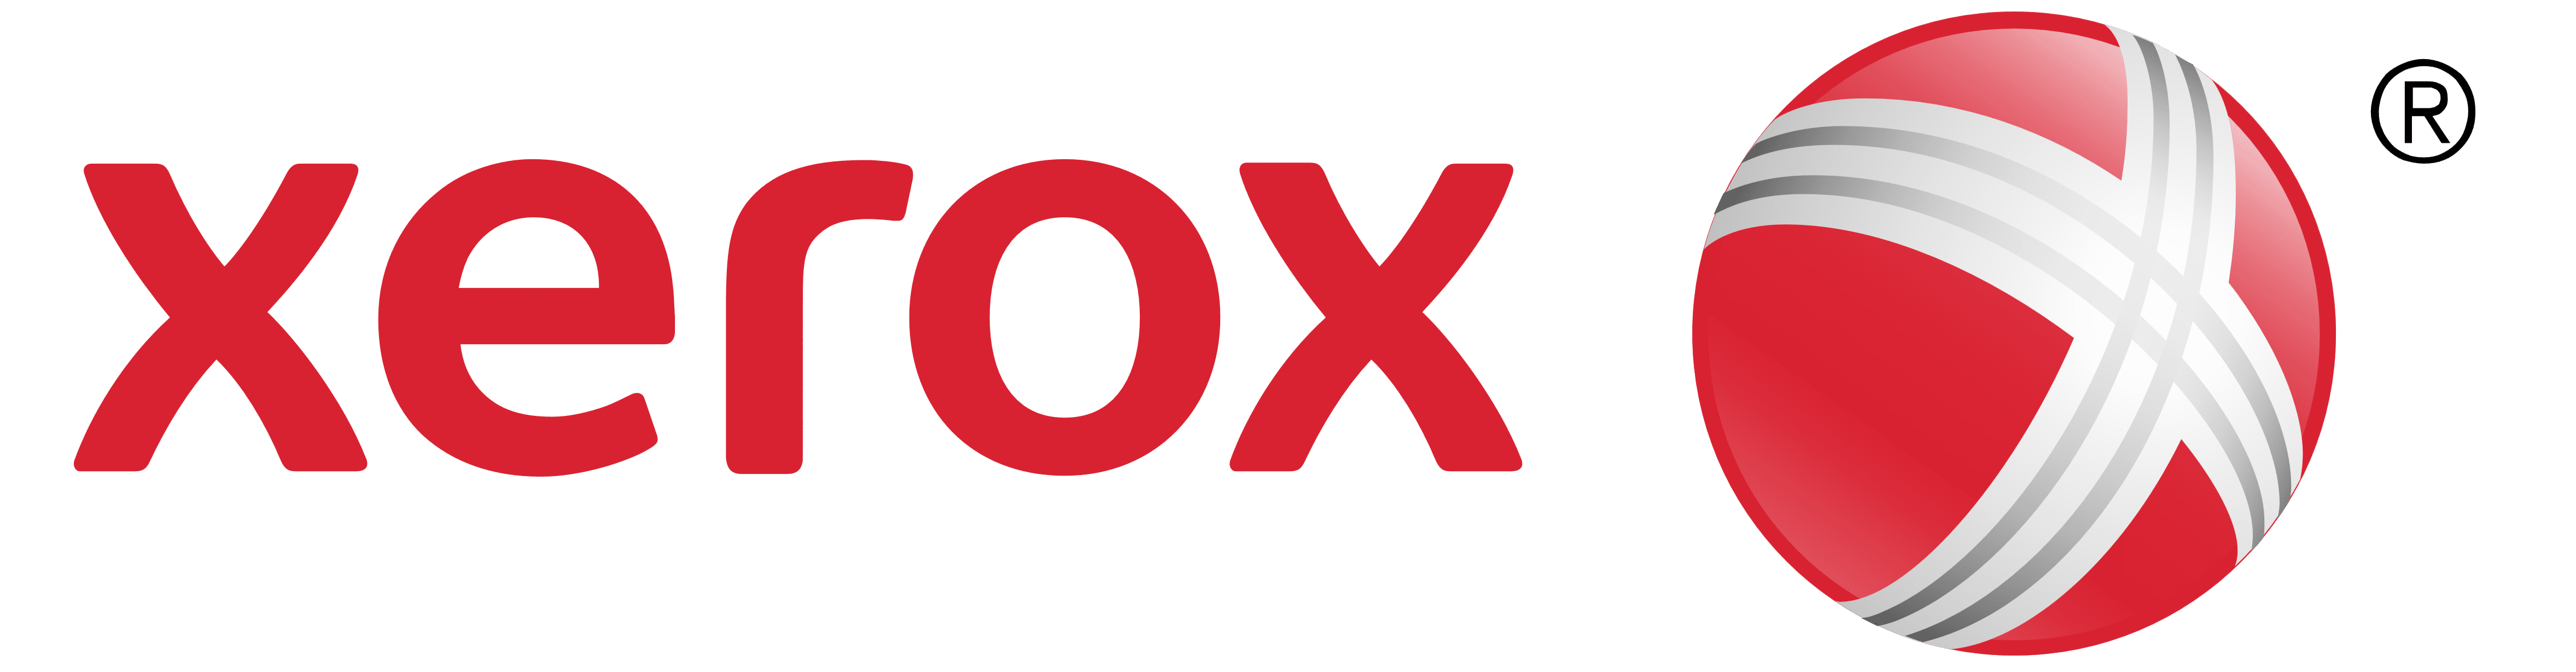 Xerox-Logo-2008